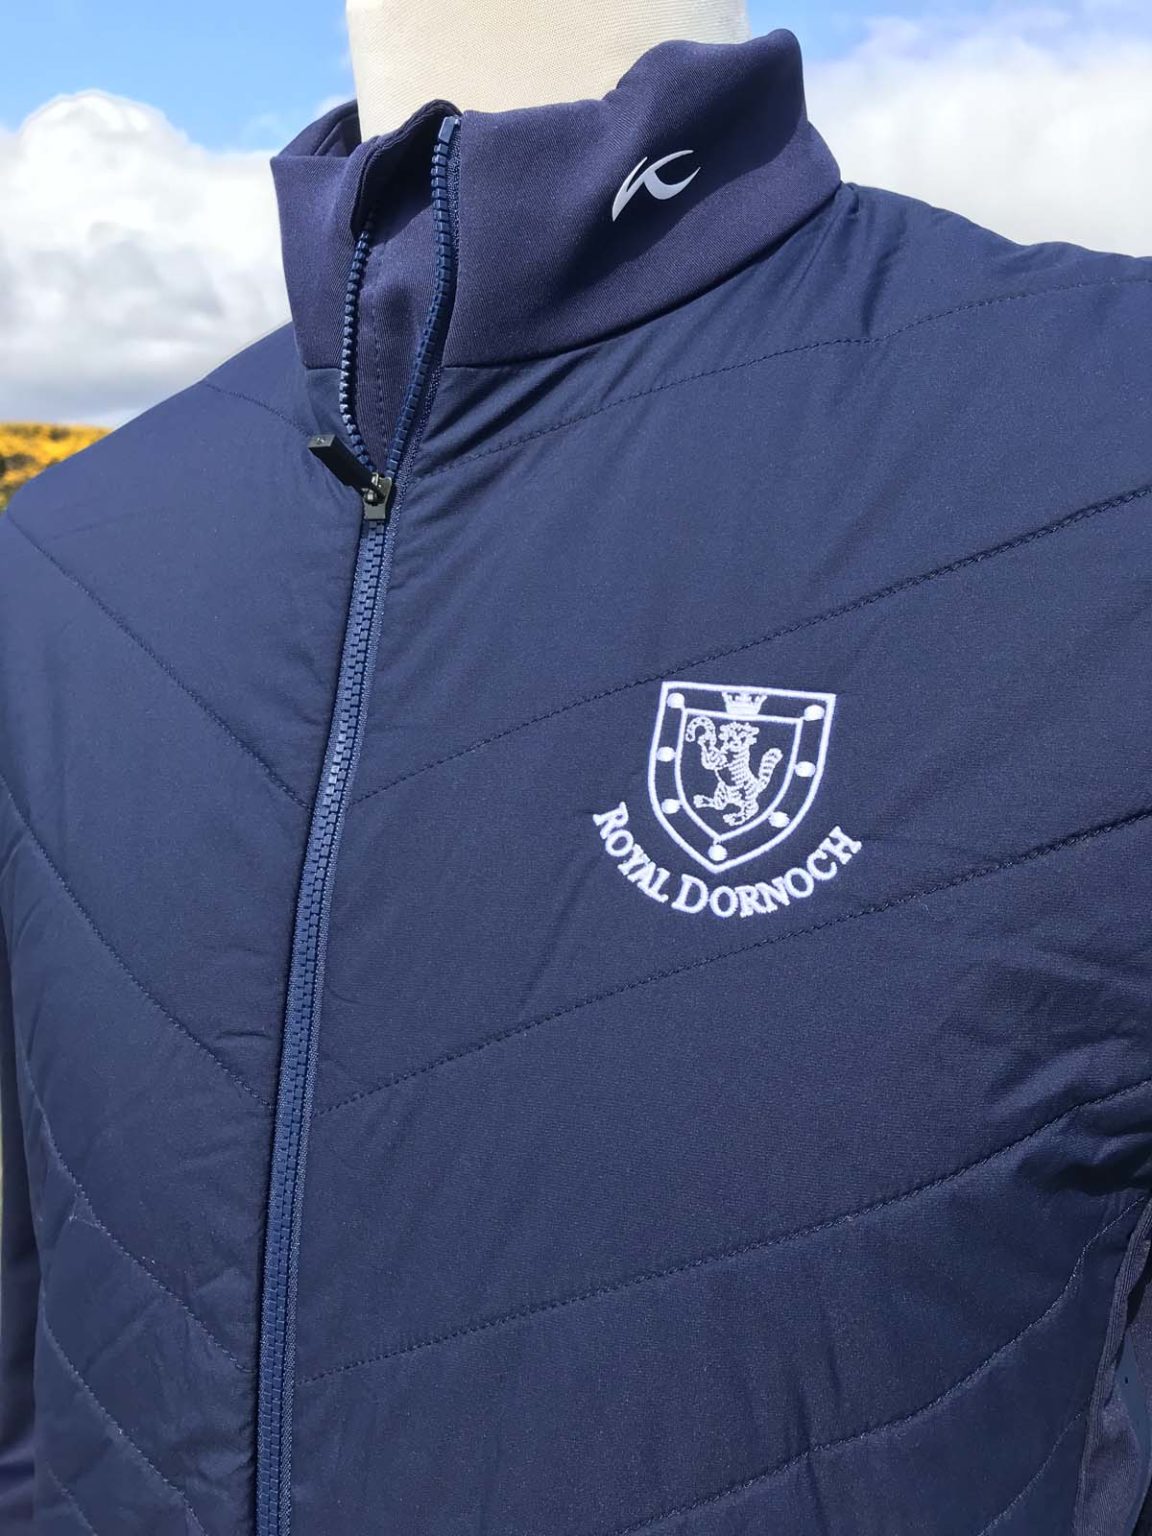 Release Windproof Jacket Royal Dornoch Pro Shop